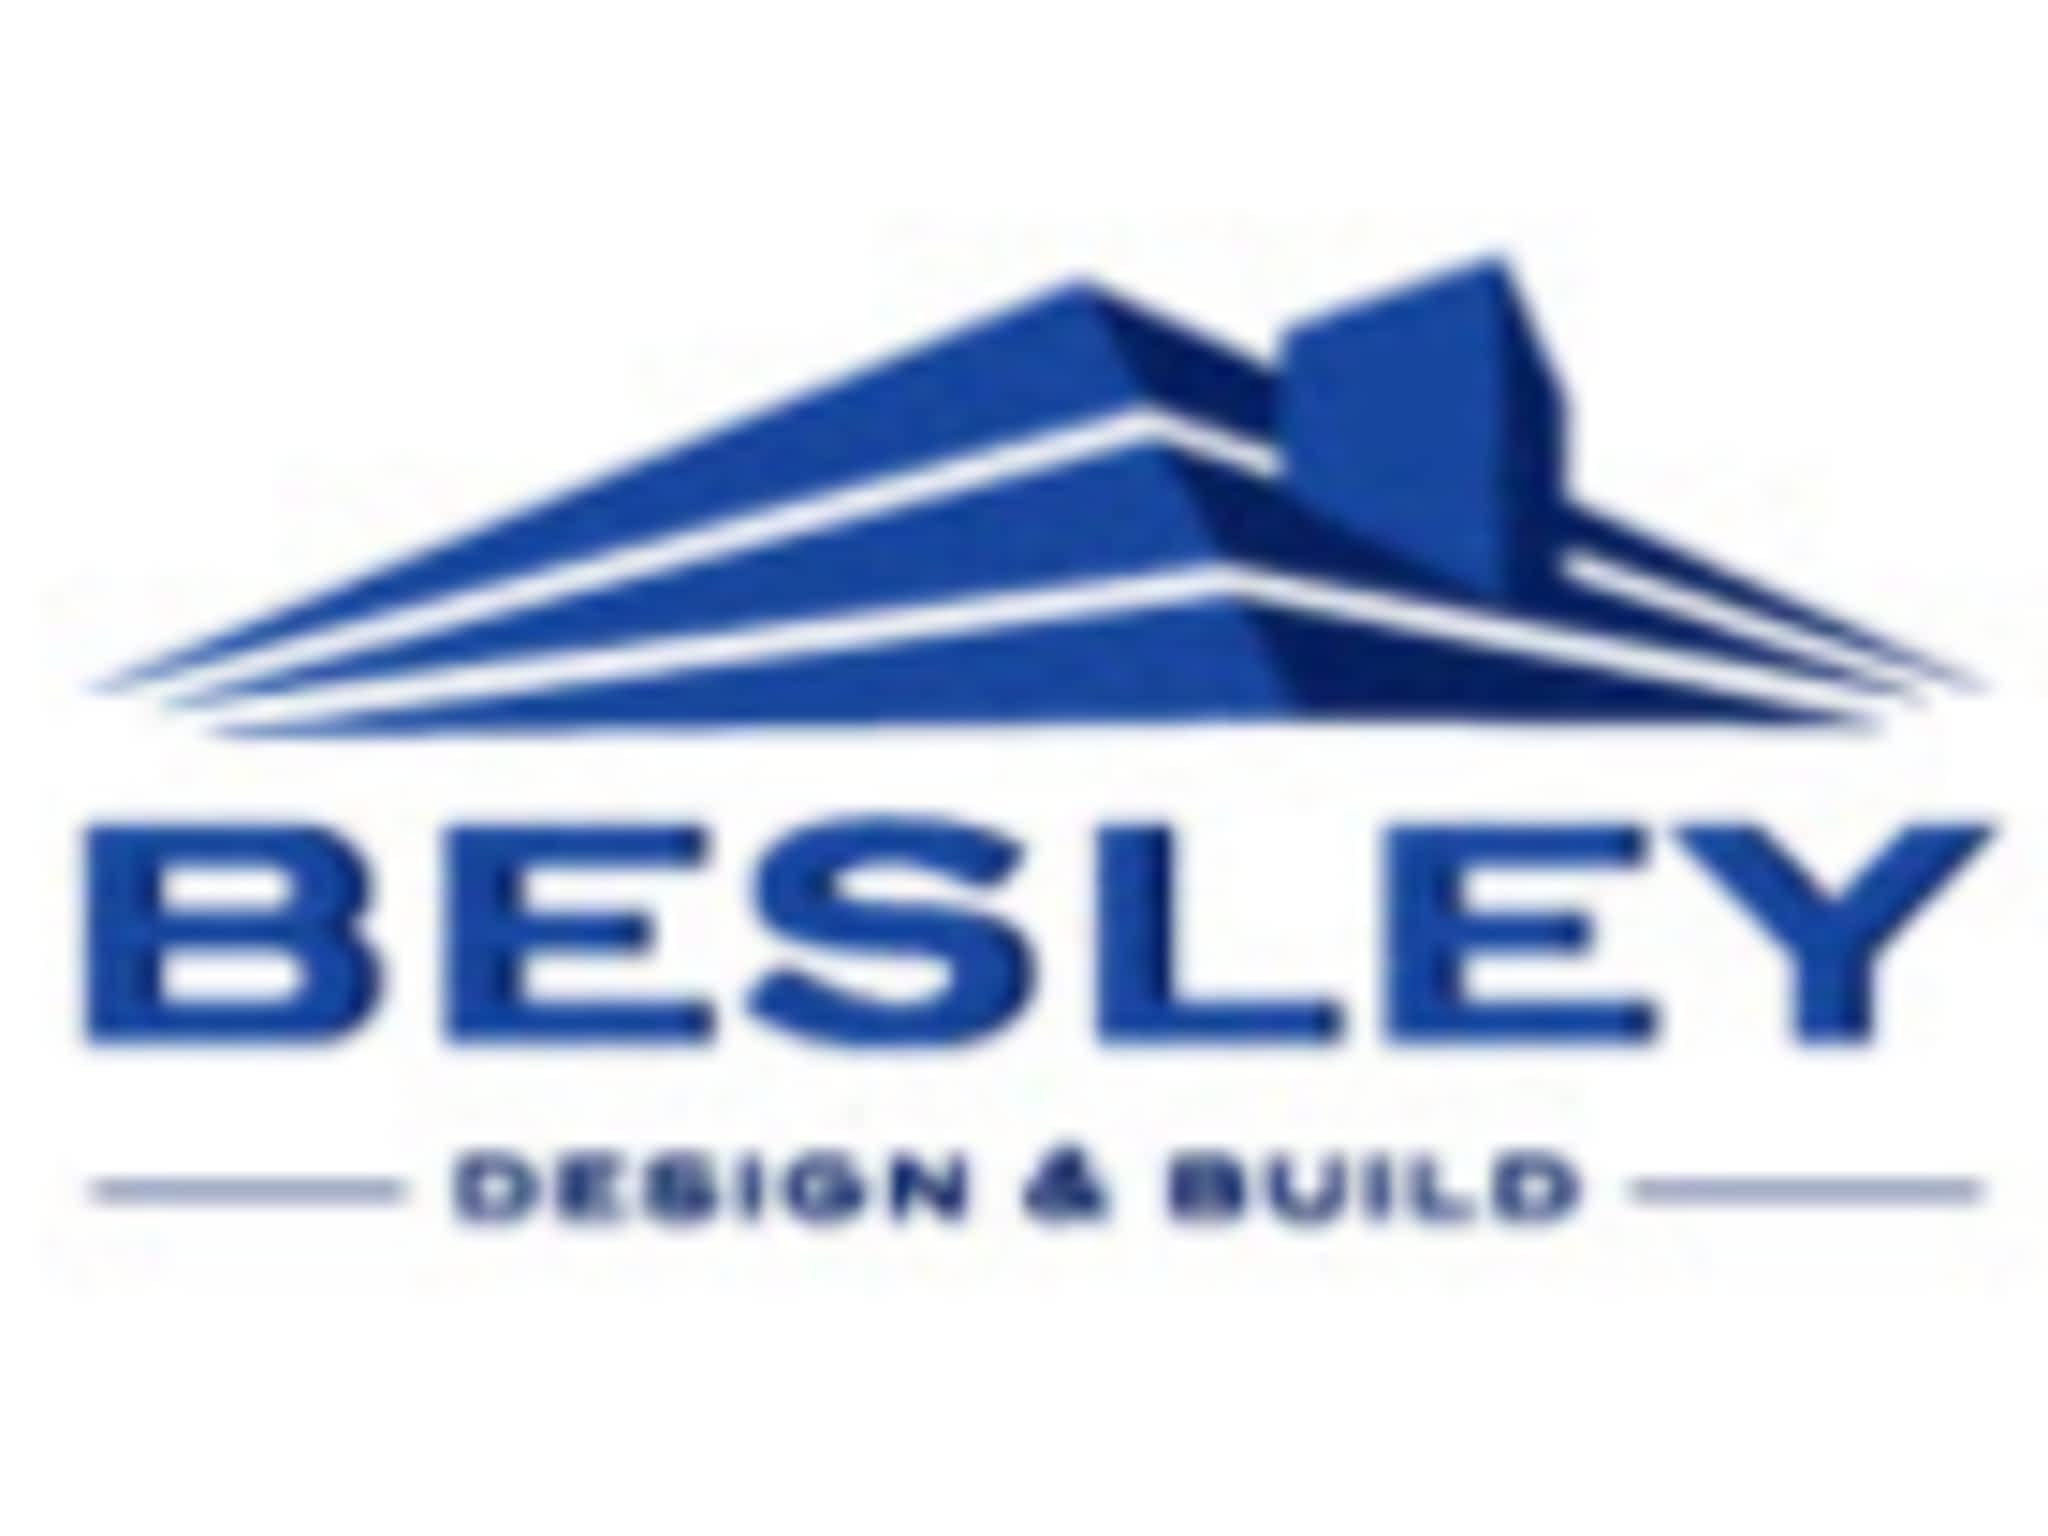 photo Besley Design & Build Ltd